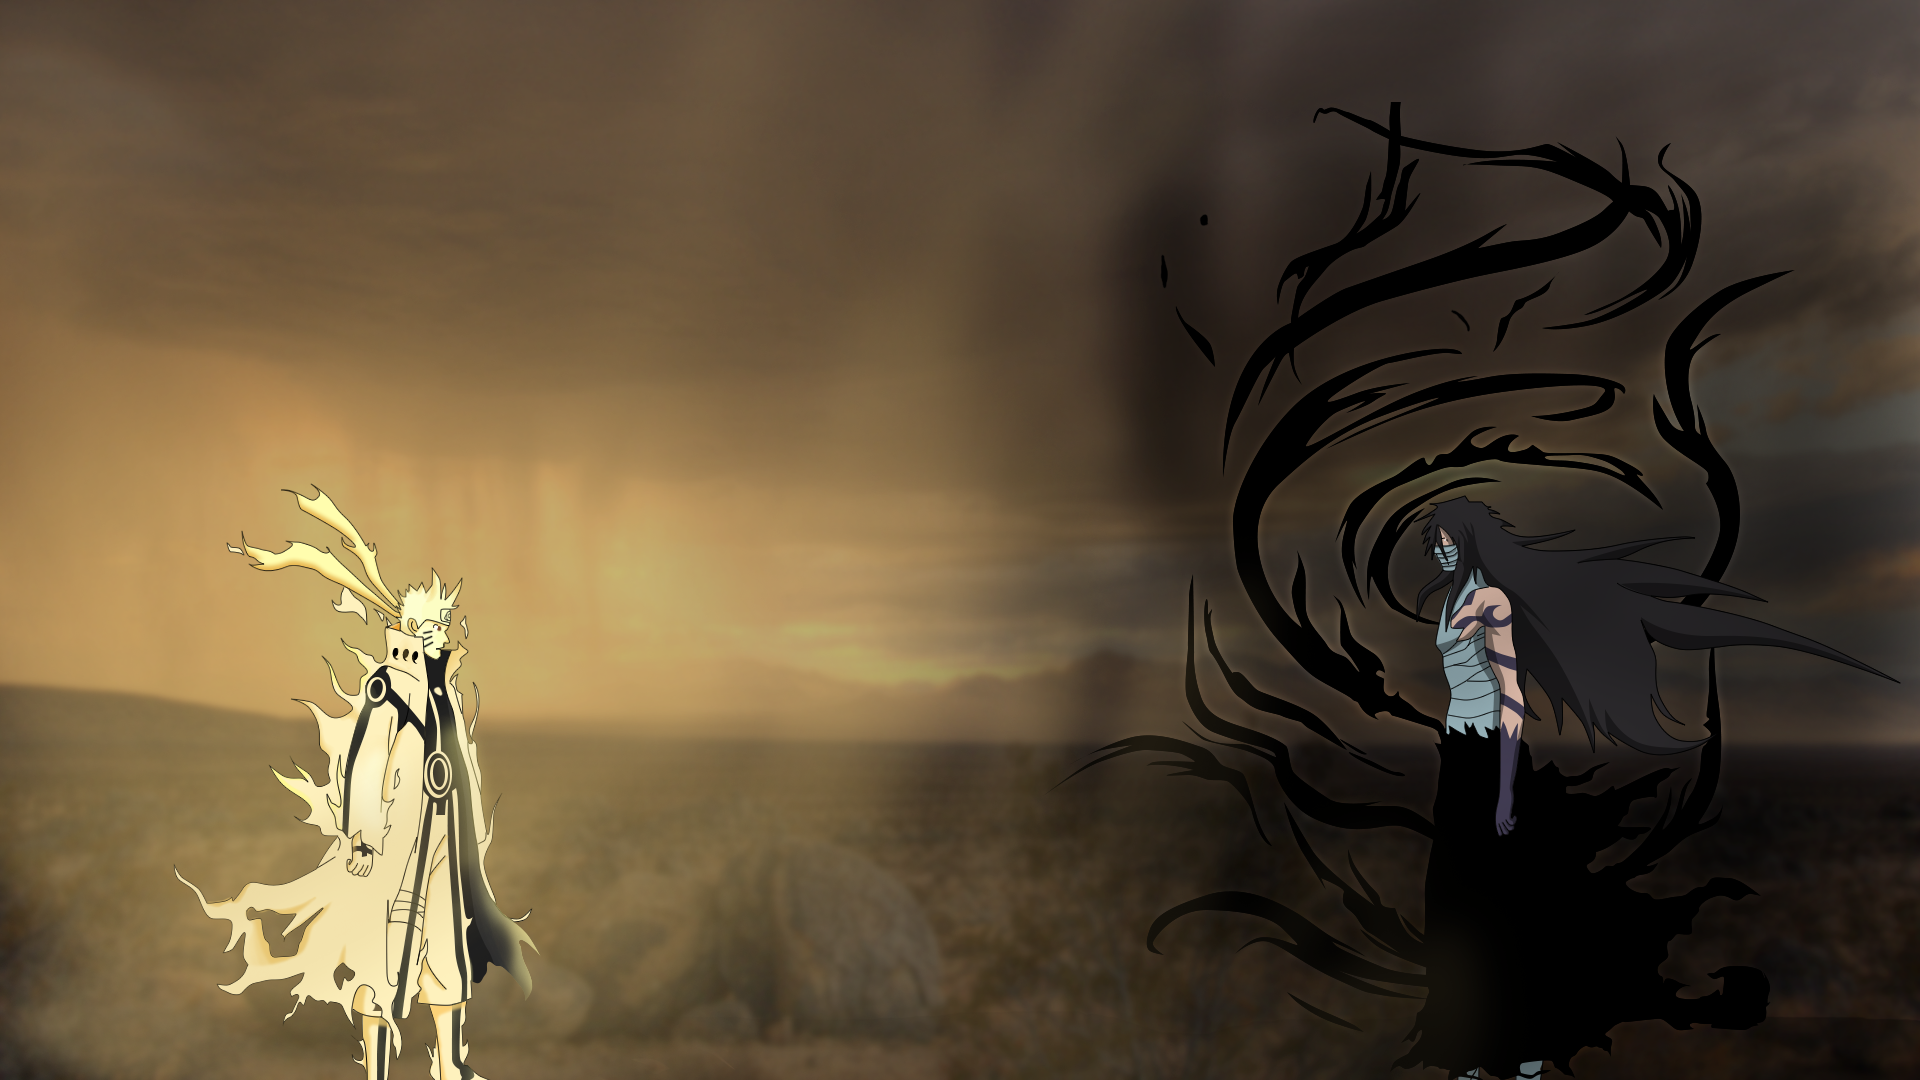 Ichigo Vs Naruto Full HD Wallpaper And Background